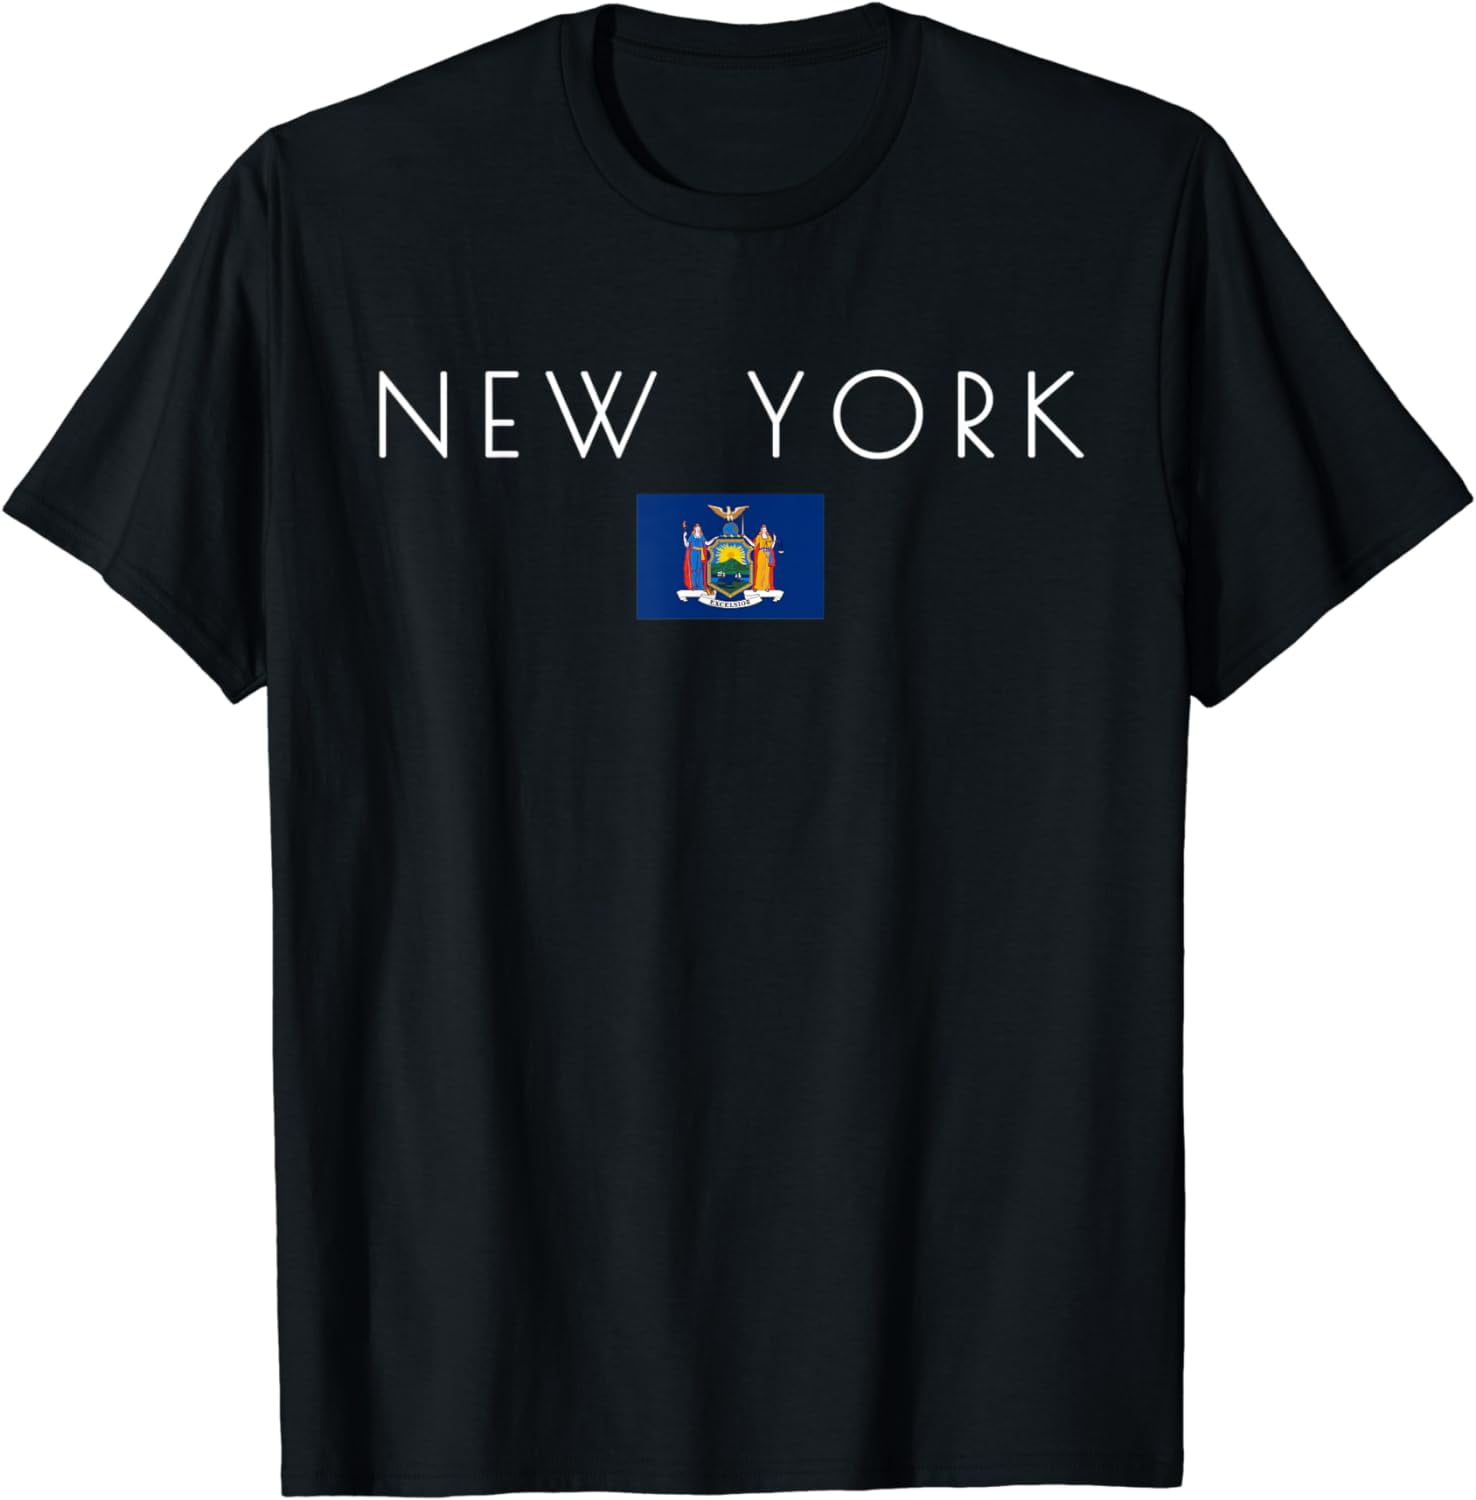 New York, USA T-Shirt - Walmart.com